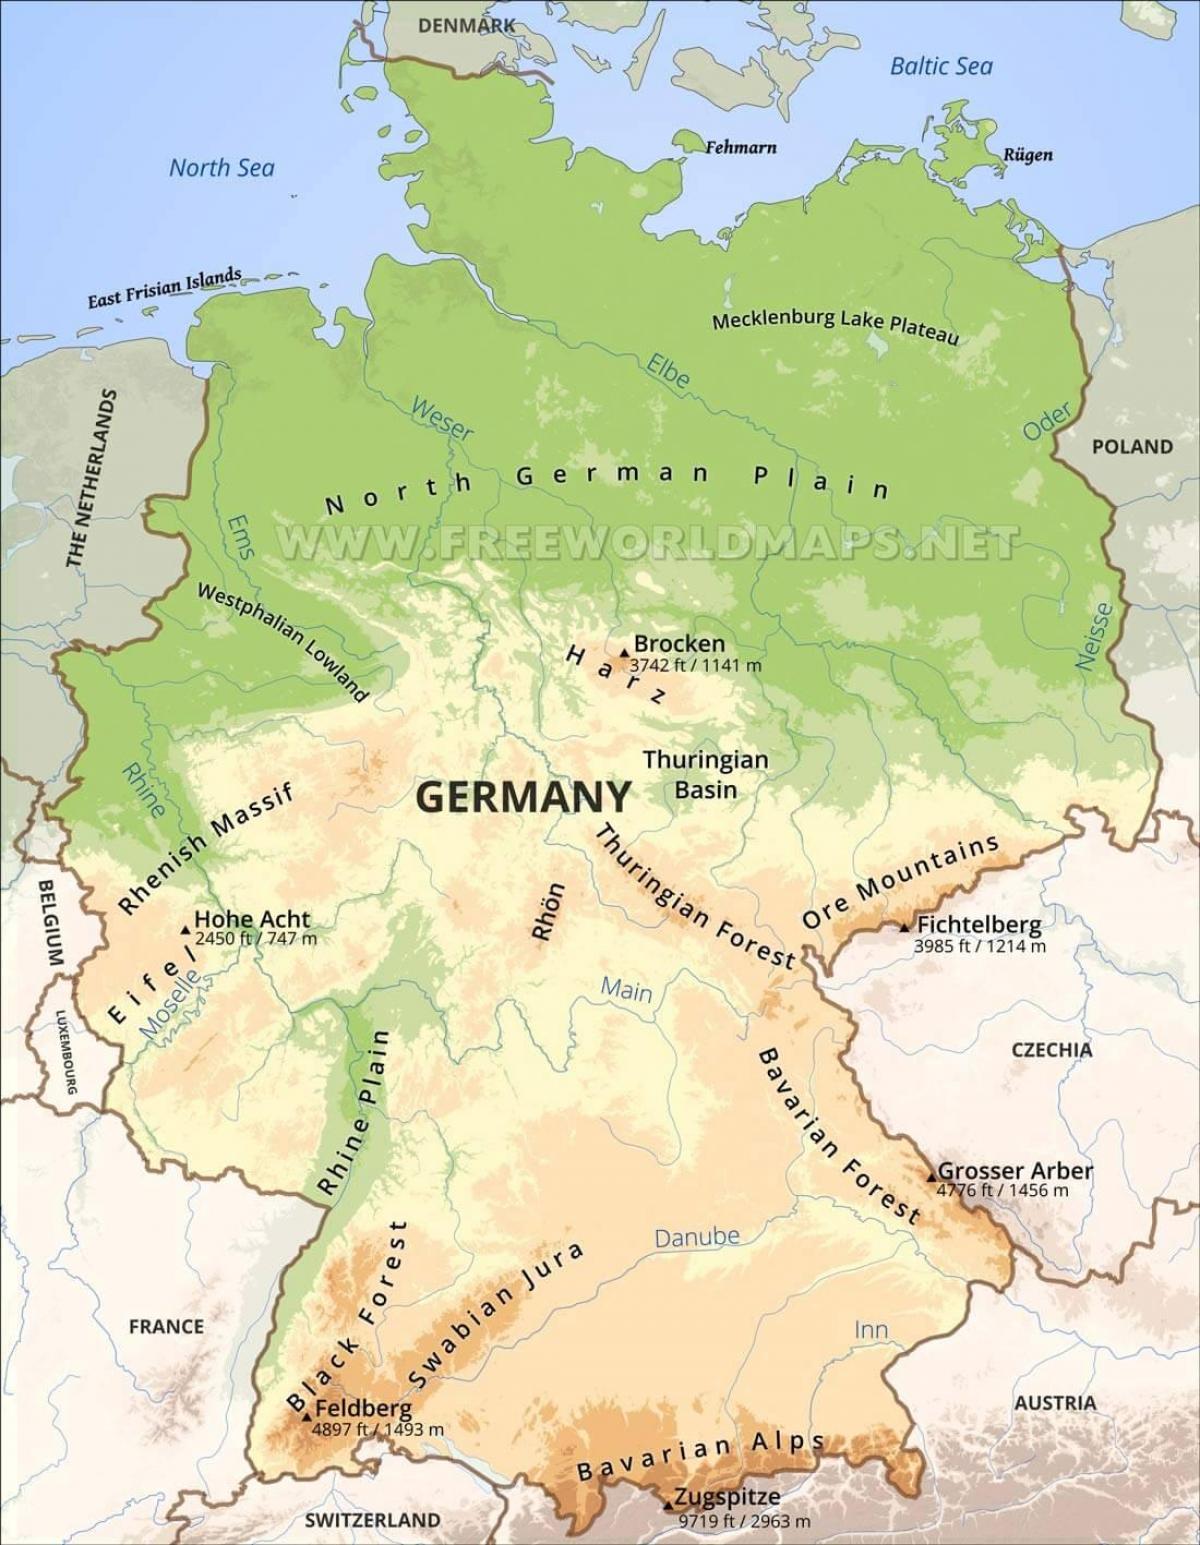 karta njemačke bonn Njemačka geografska karta   Geografska karta Njemačke (Zapadna  karta njemačke bonn